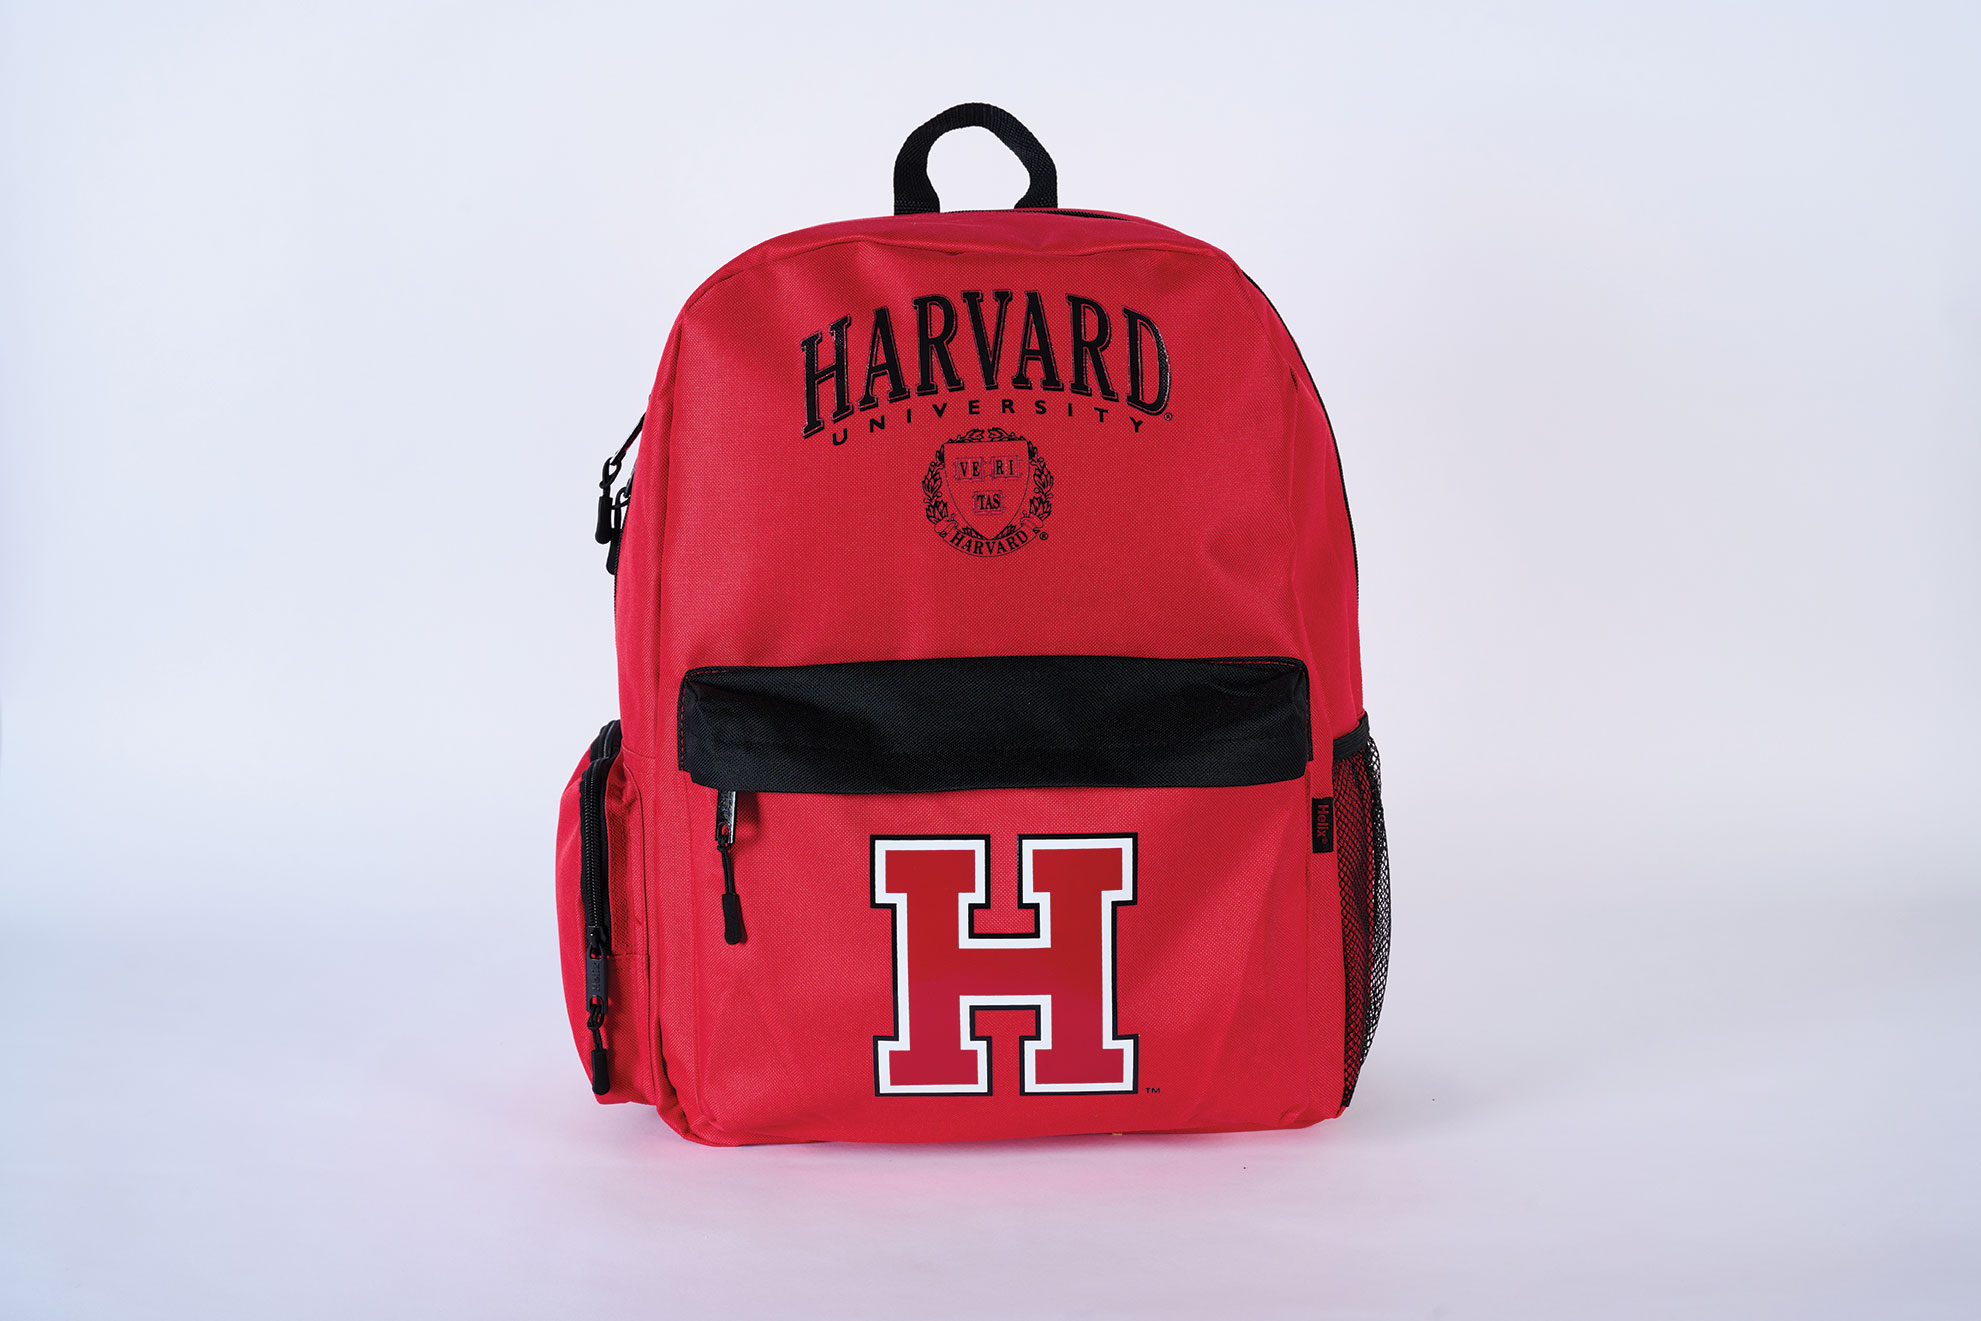 Harvard backpack